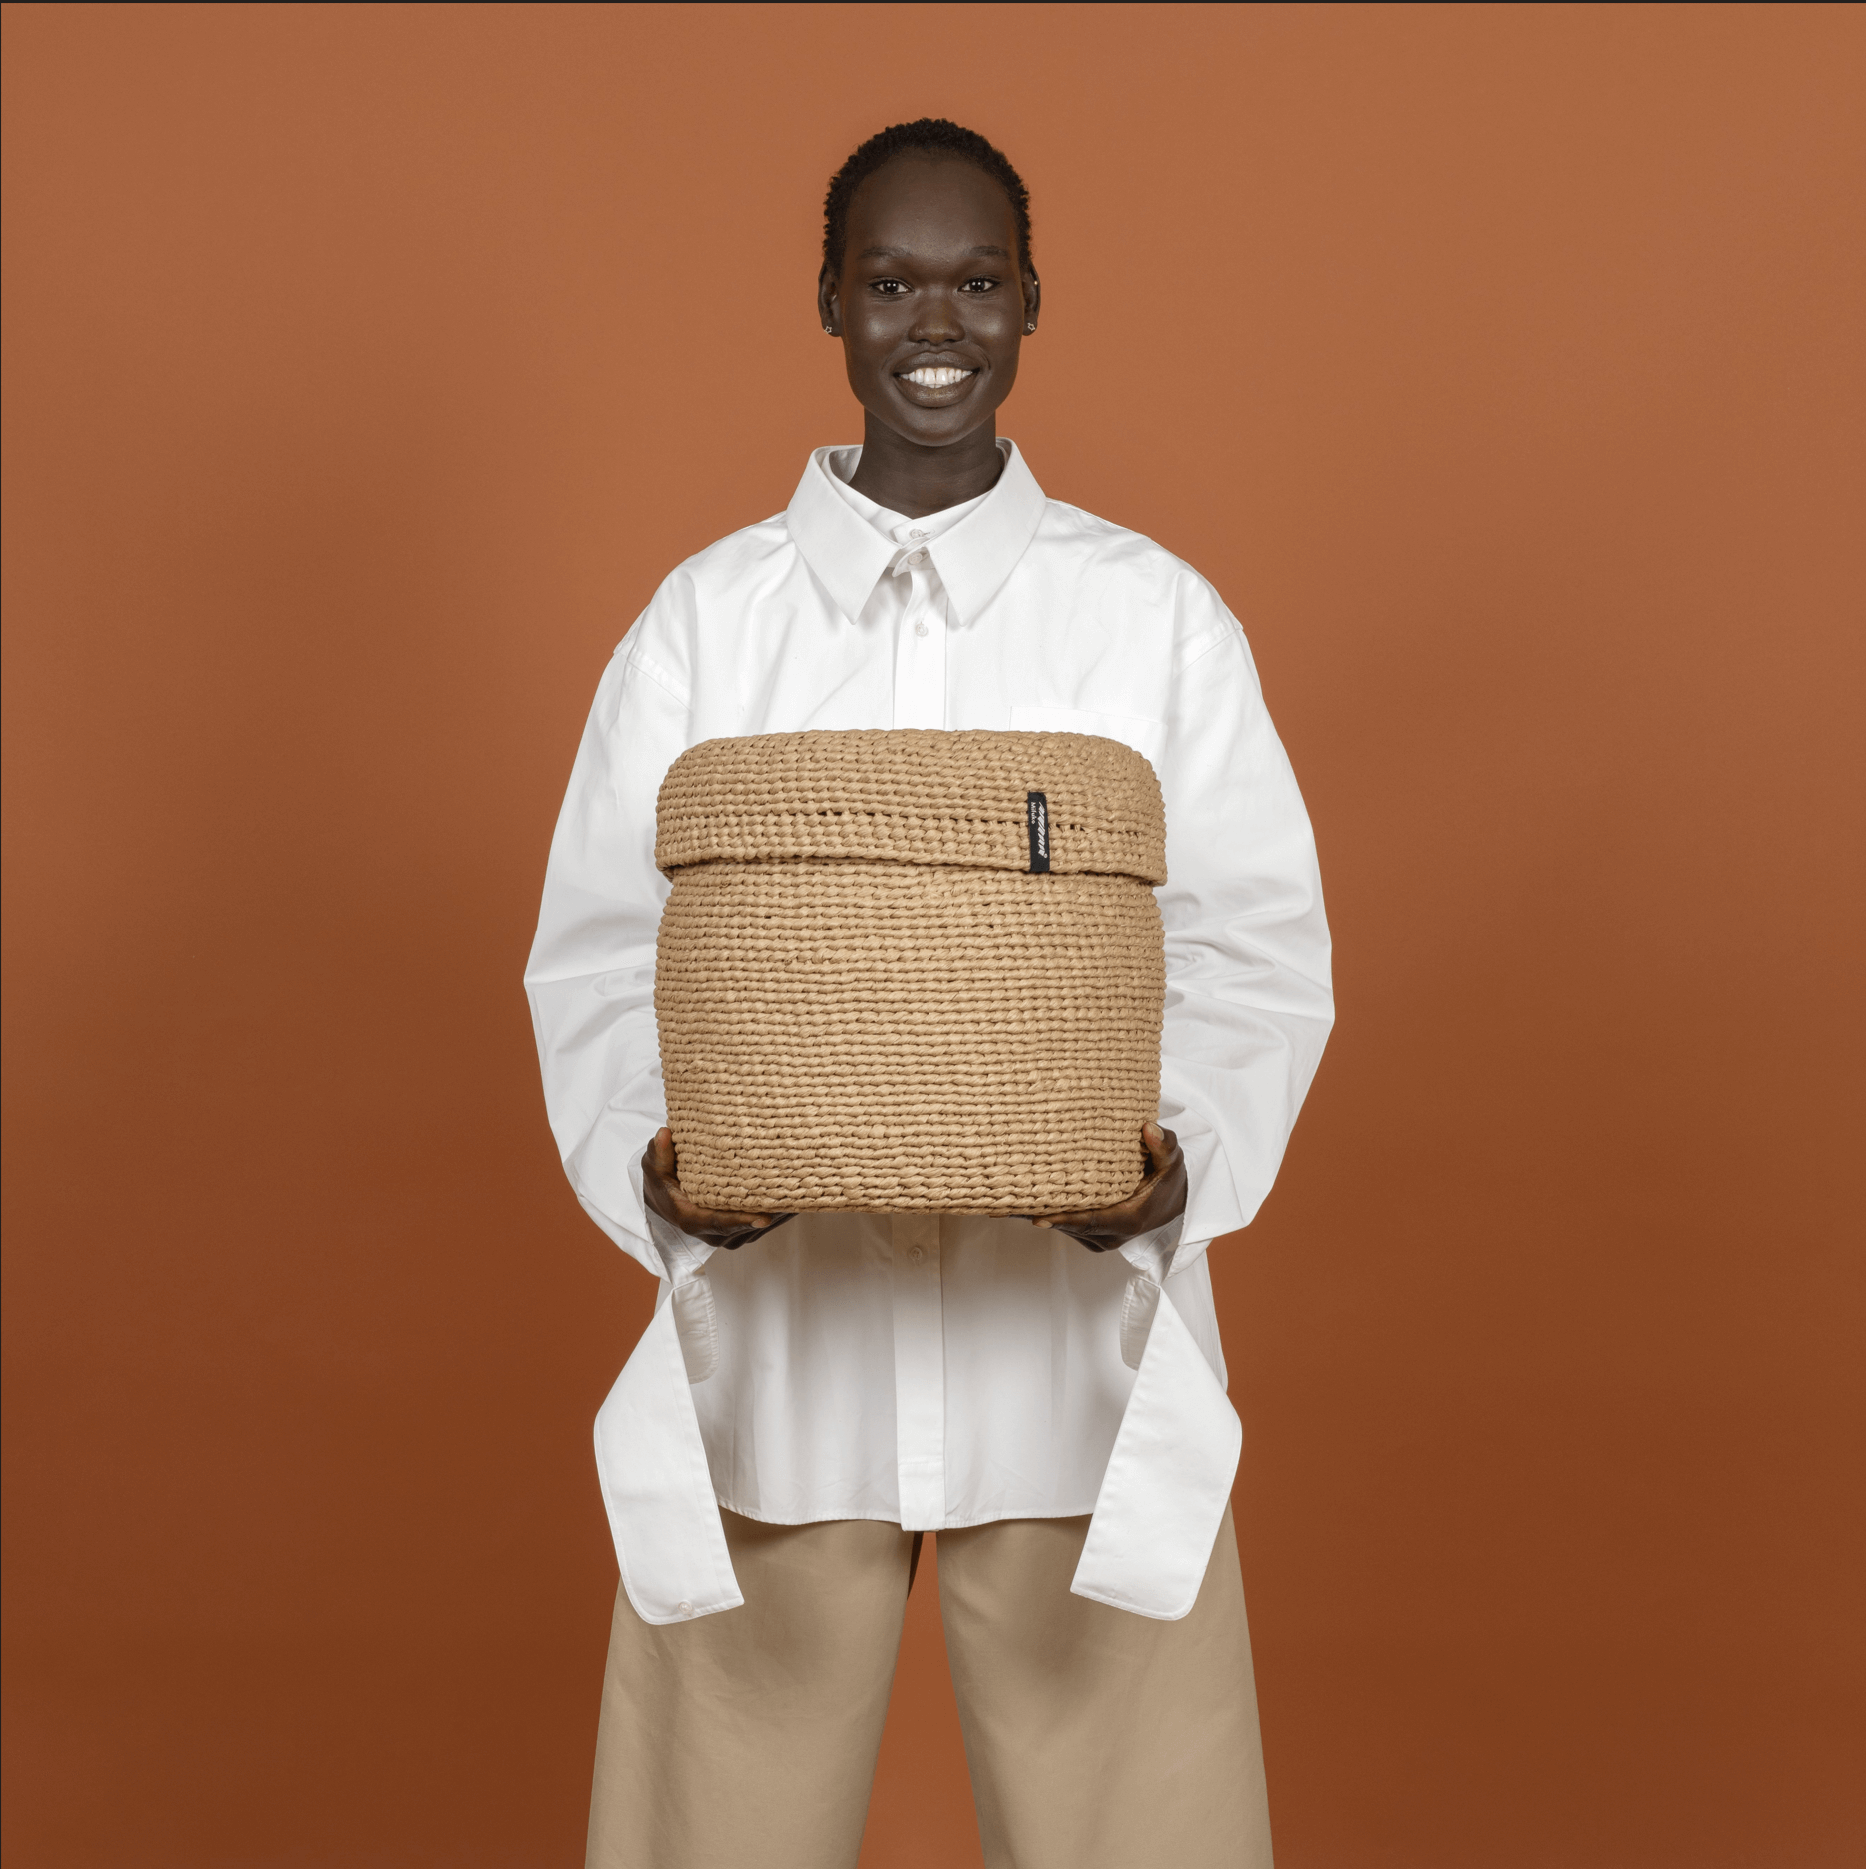 Mifuko Paper Basket with lid S Kiondo basket with lid | Brown M